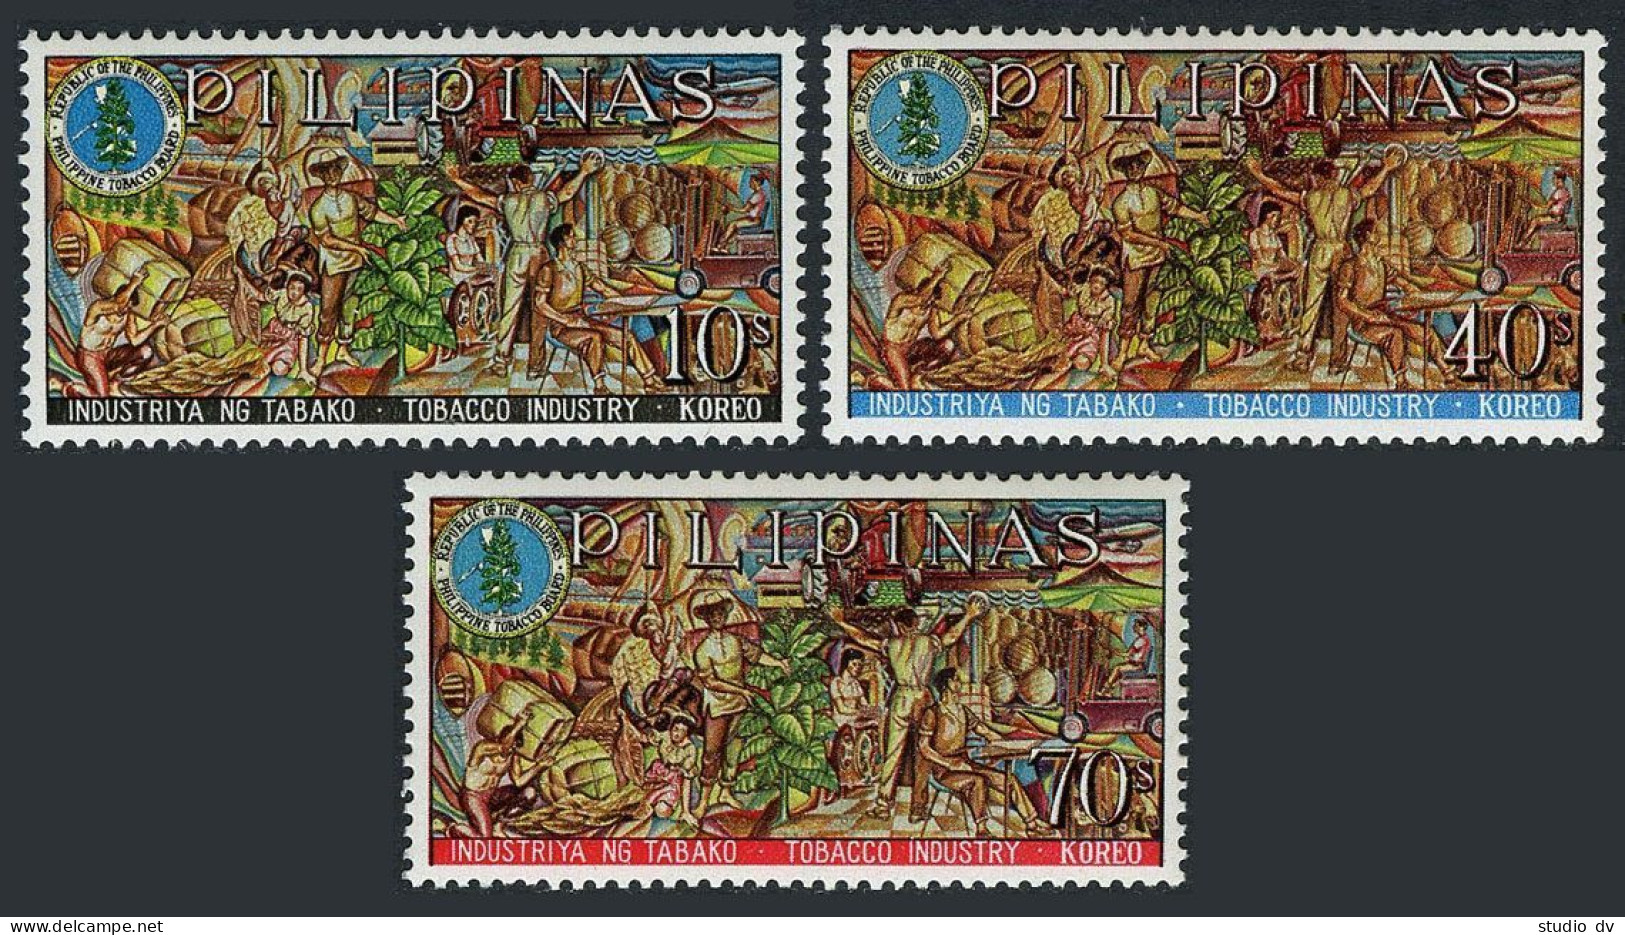 Philippines 993-995,MNH.Michel 853-855. Tobacco Industry,Board's Emblem,1968. - Philippinen